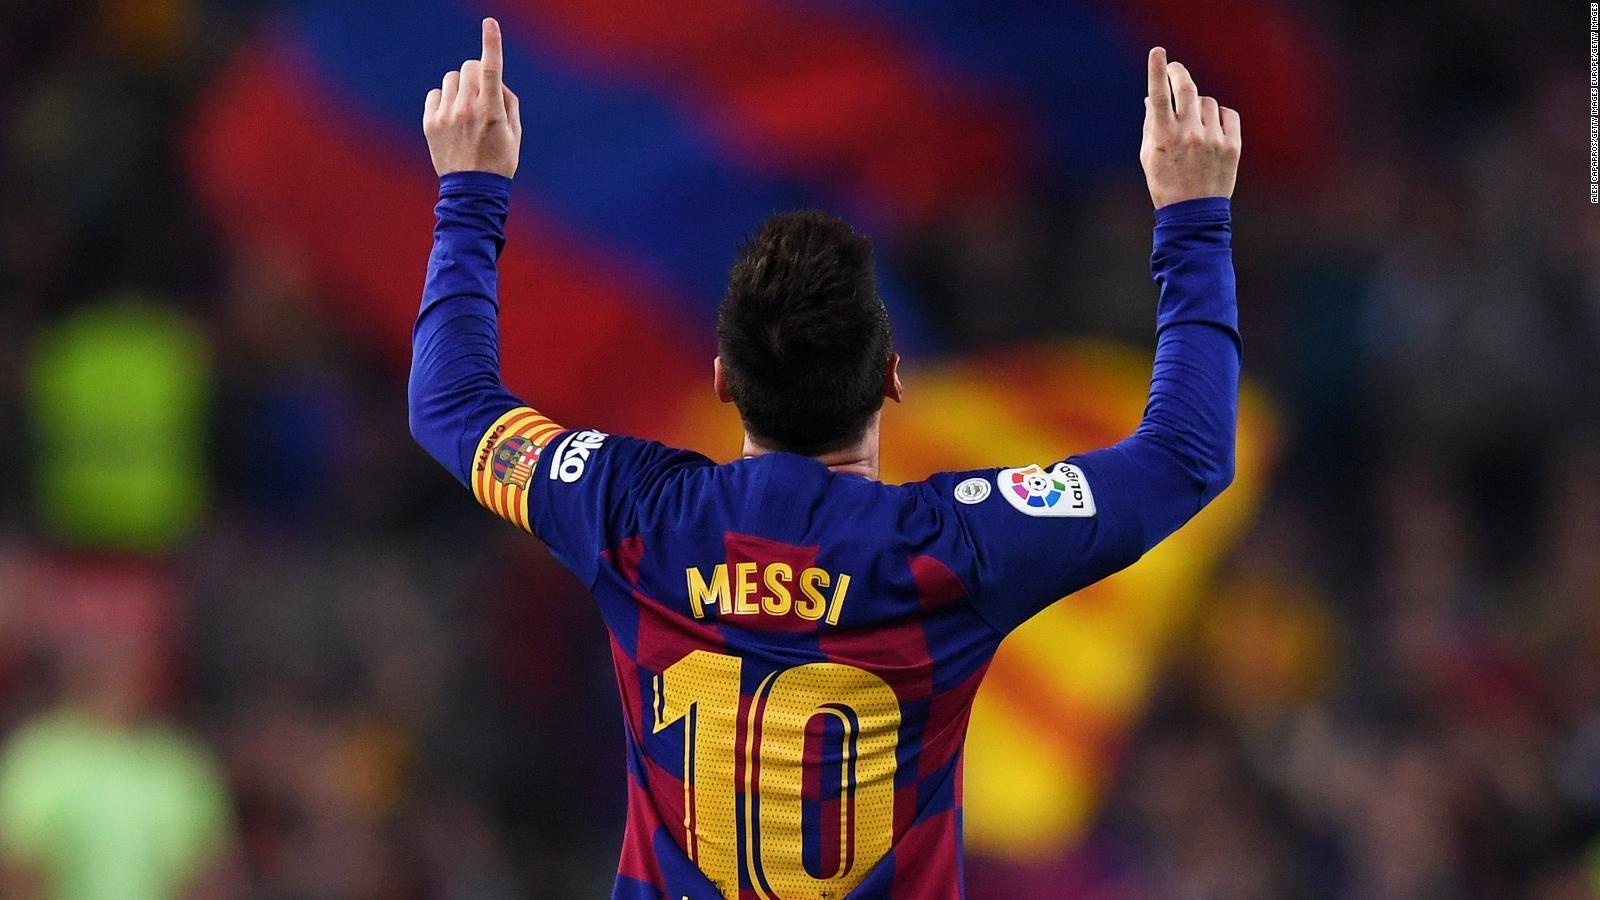 Lapulga98 on Twitter Lionel Messi Wallpaper RTs Are Appreciated  WeAreMessi TeamMessi TeamMessiHQ BarcaUniversal LioneIMessiTeam  httpstcoGtNo92cEkd  Twitter